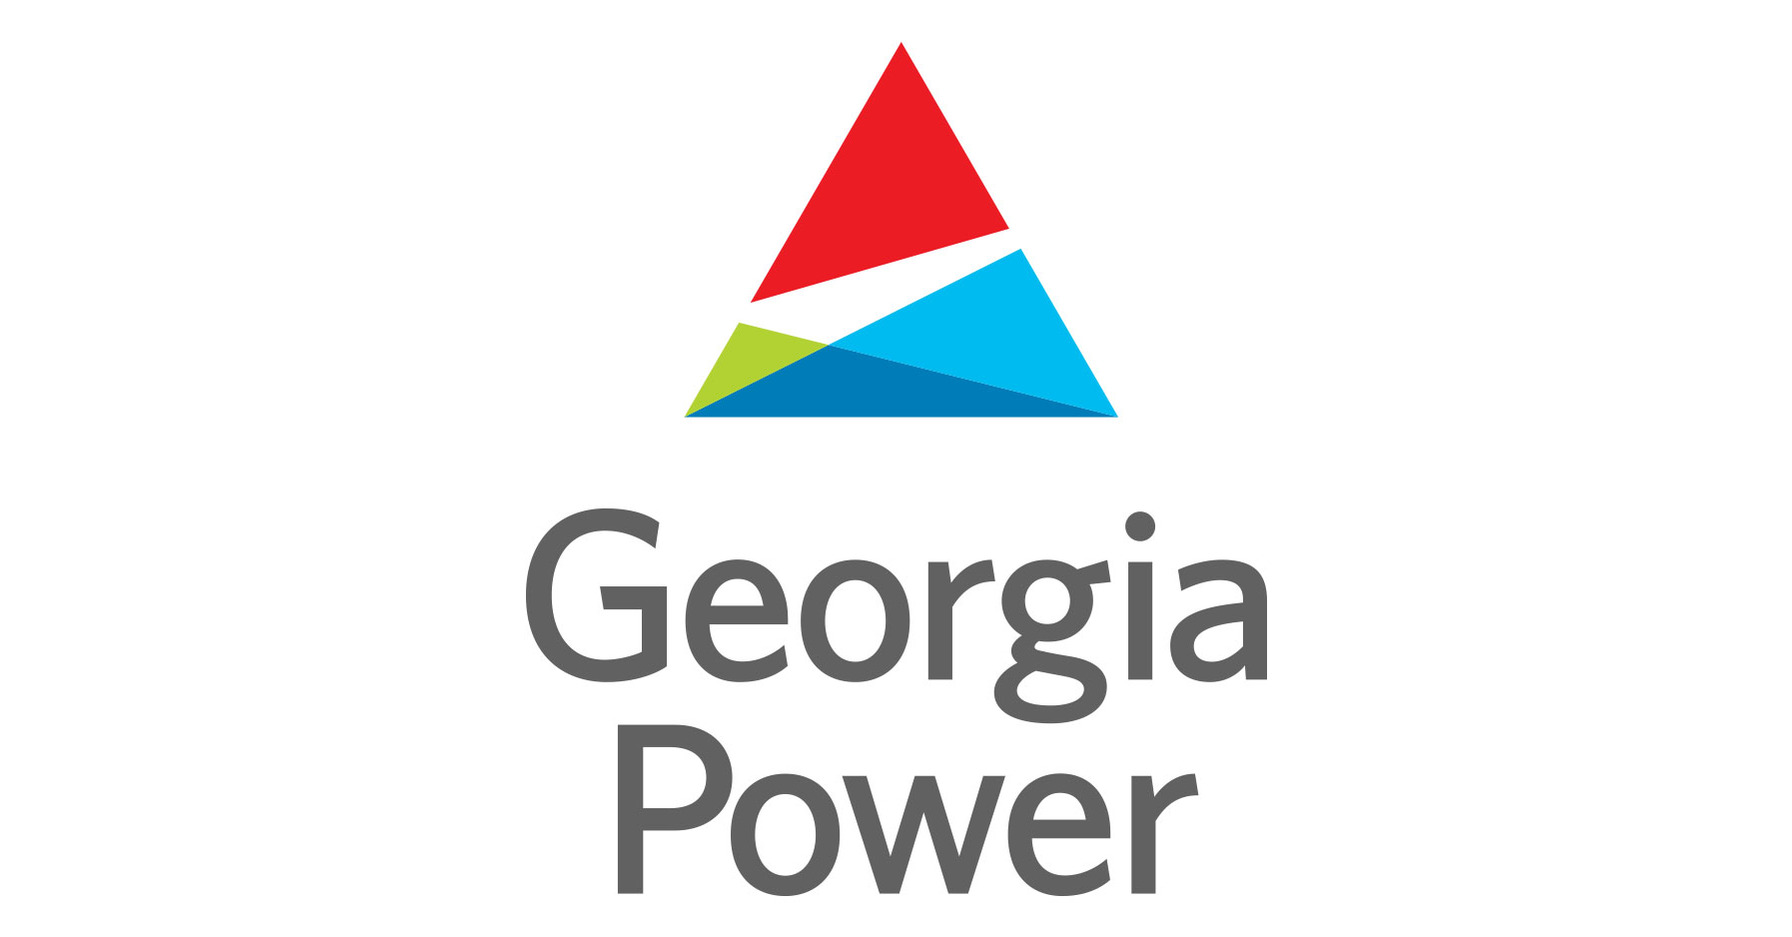 Georgia Power Marketplace